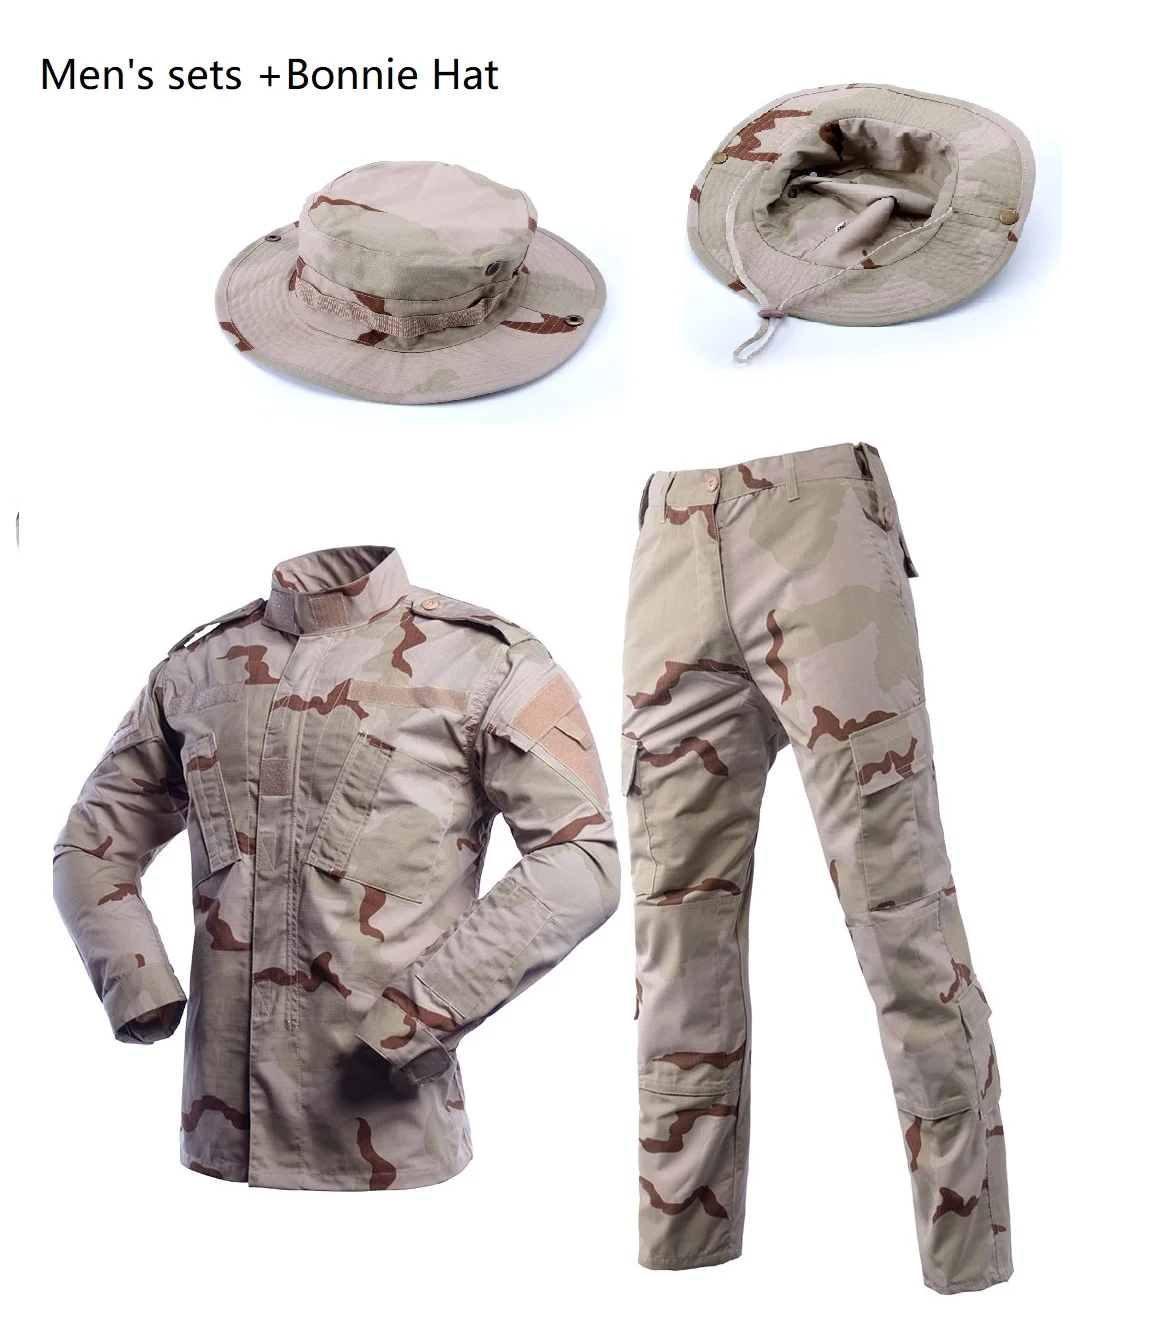 Men's Sets 3-color Desert Camouflage ACU Military Uiforms With Bonnie Hat